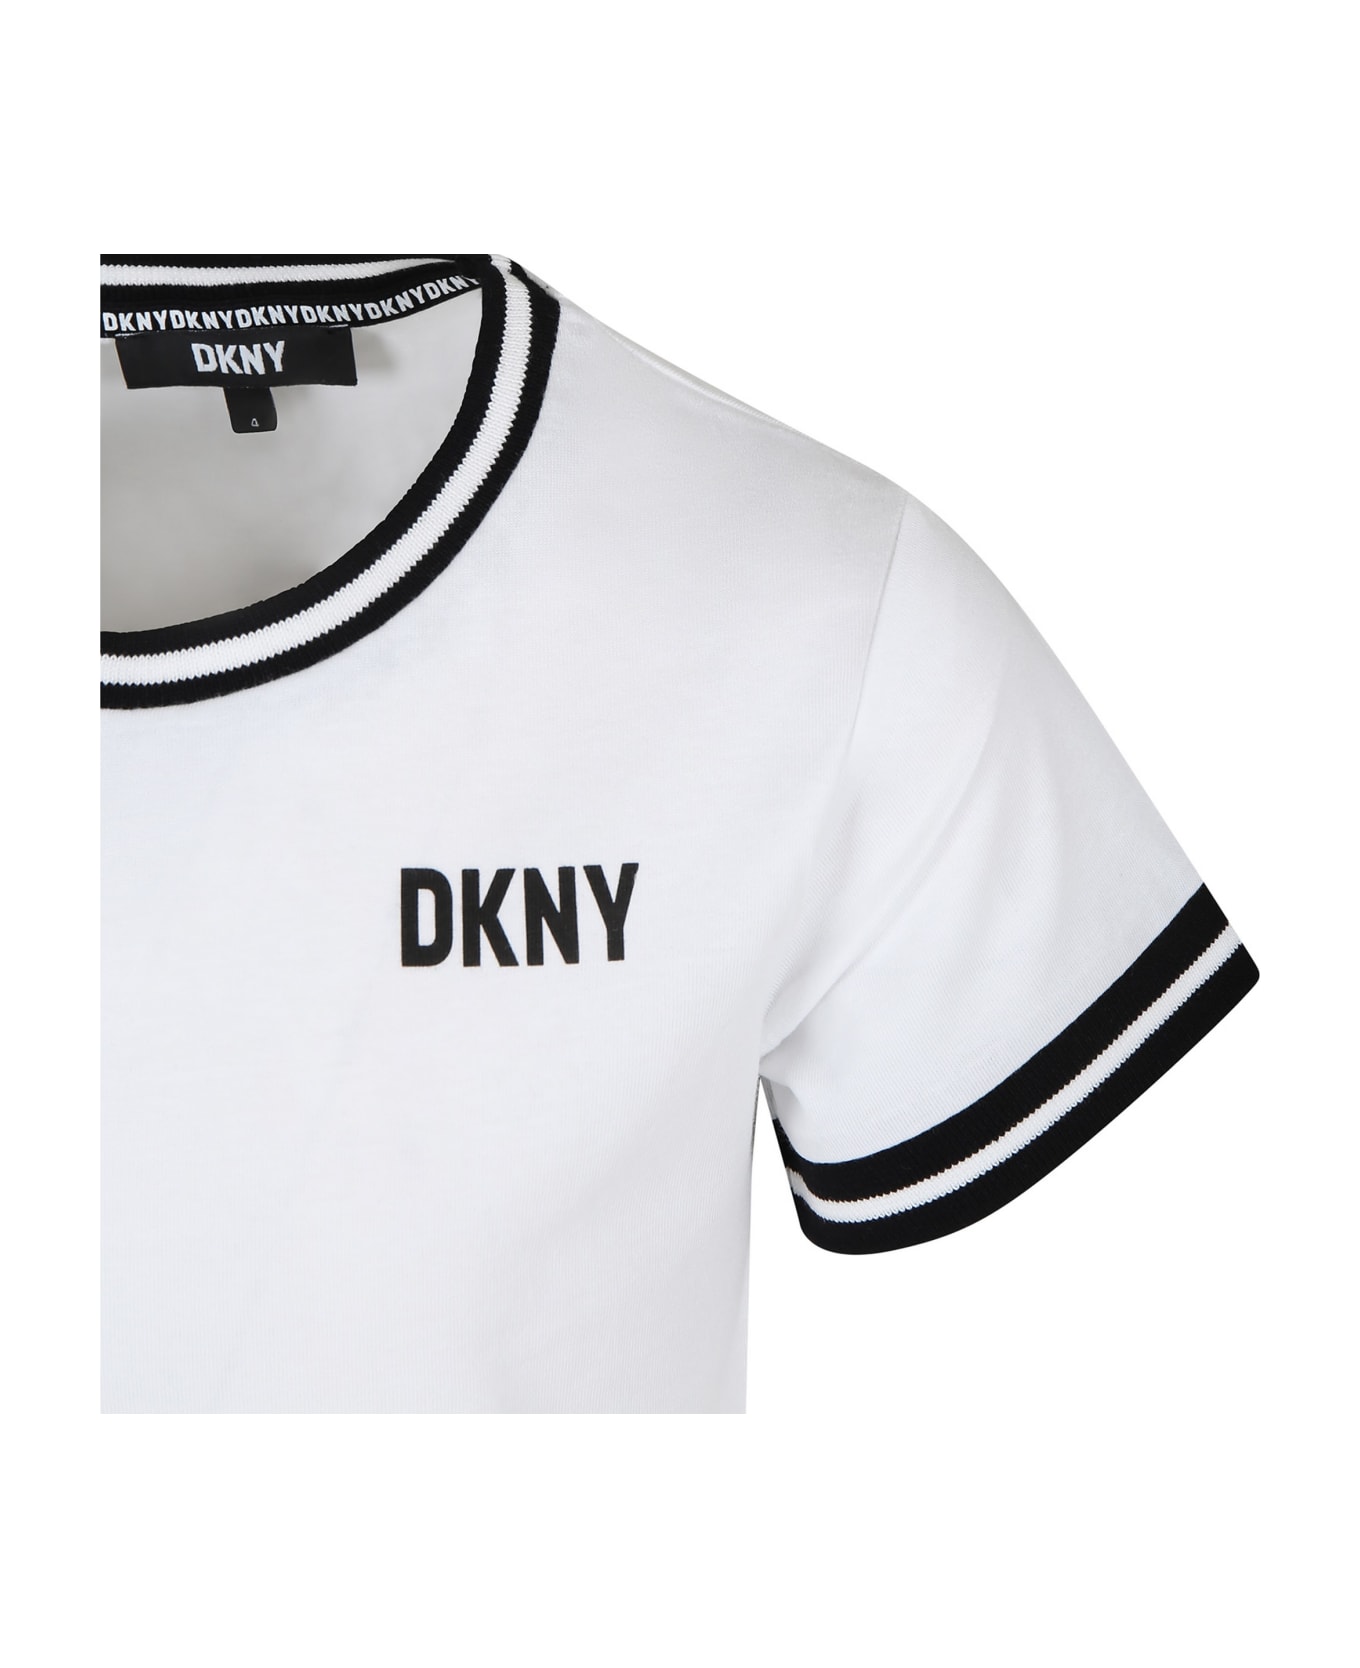 DKNY White T-shirt For Girl With Logo - White